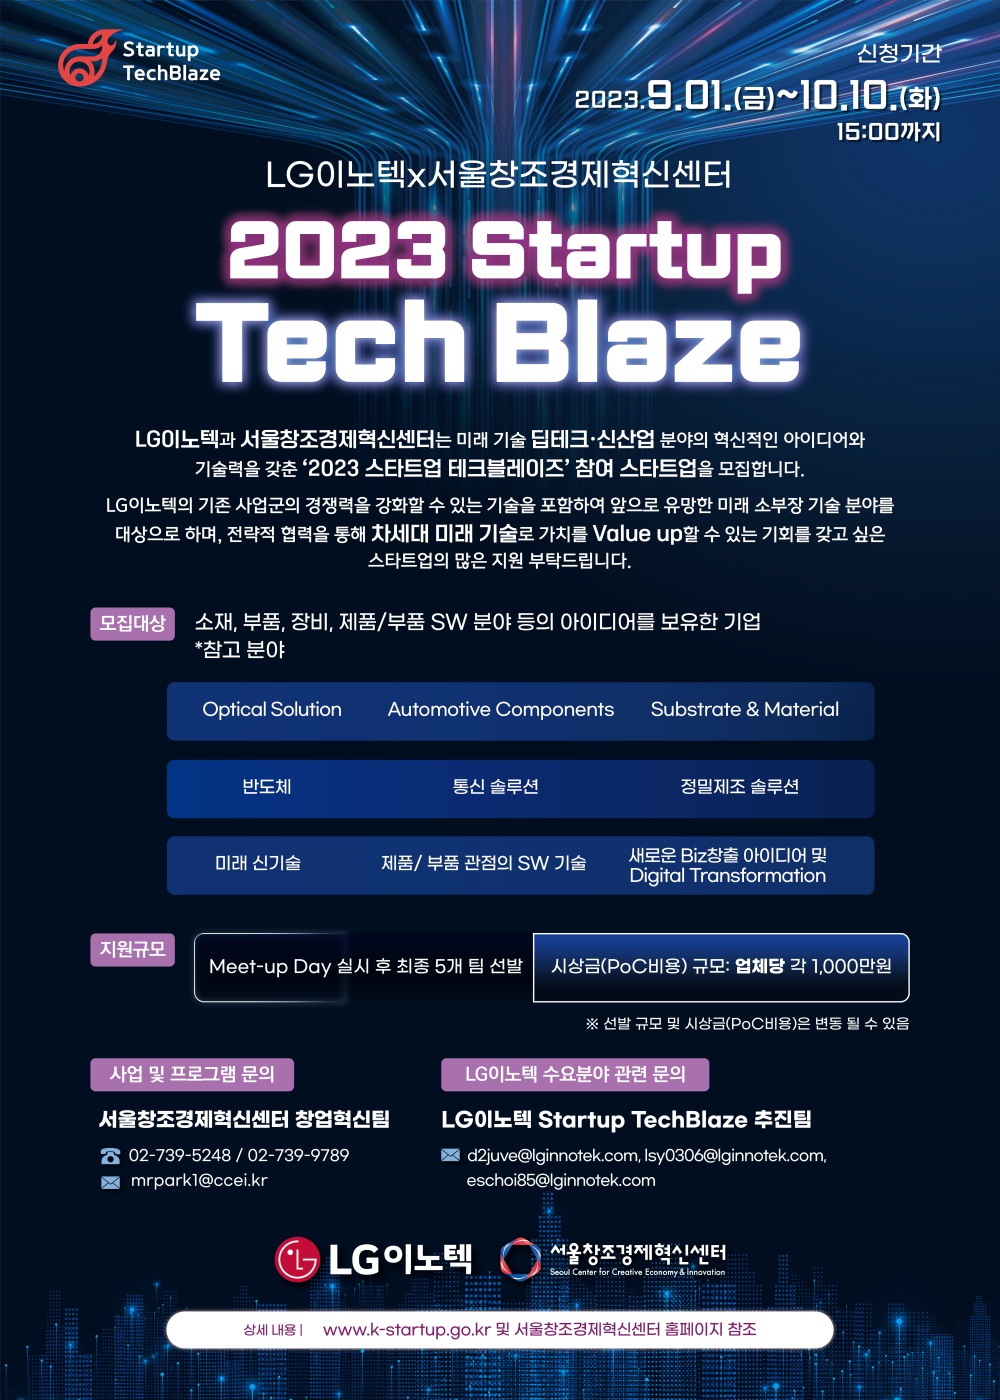 ¡Ú¡Ú2023 Startup TechBlaze ½ÉÇÃÆ÷½ºÅÍ ÃÖÁ¾.jpg